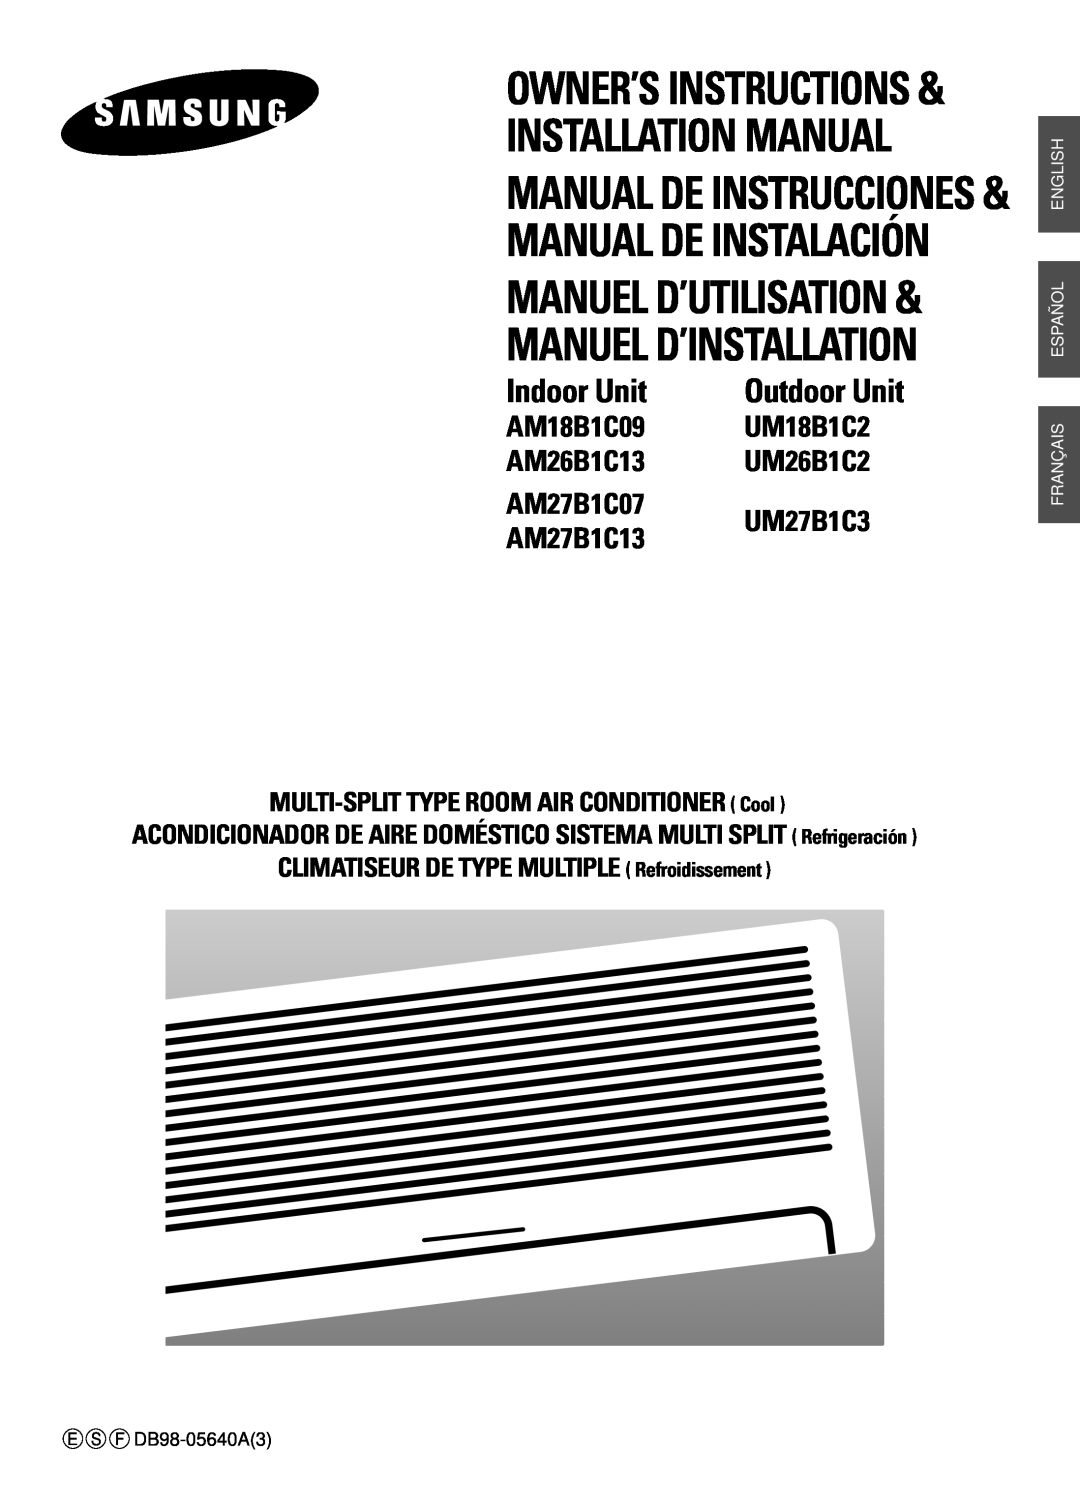 Samsung AM18B1C09 installation manual Installation Manual Manual De Instrucciones, Owner’S Instructions, Indoor Unit 